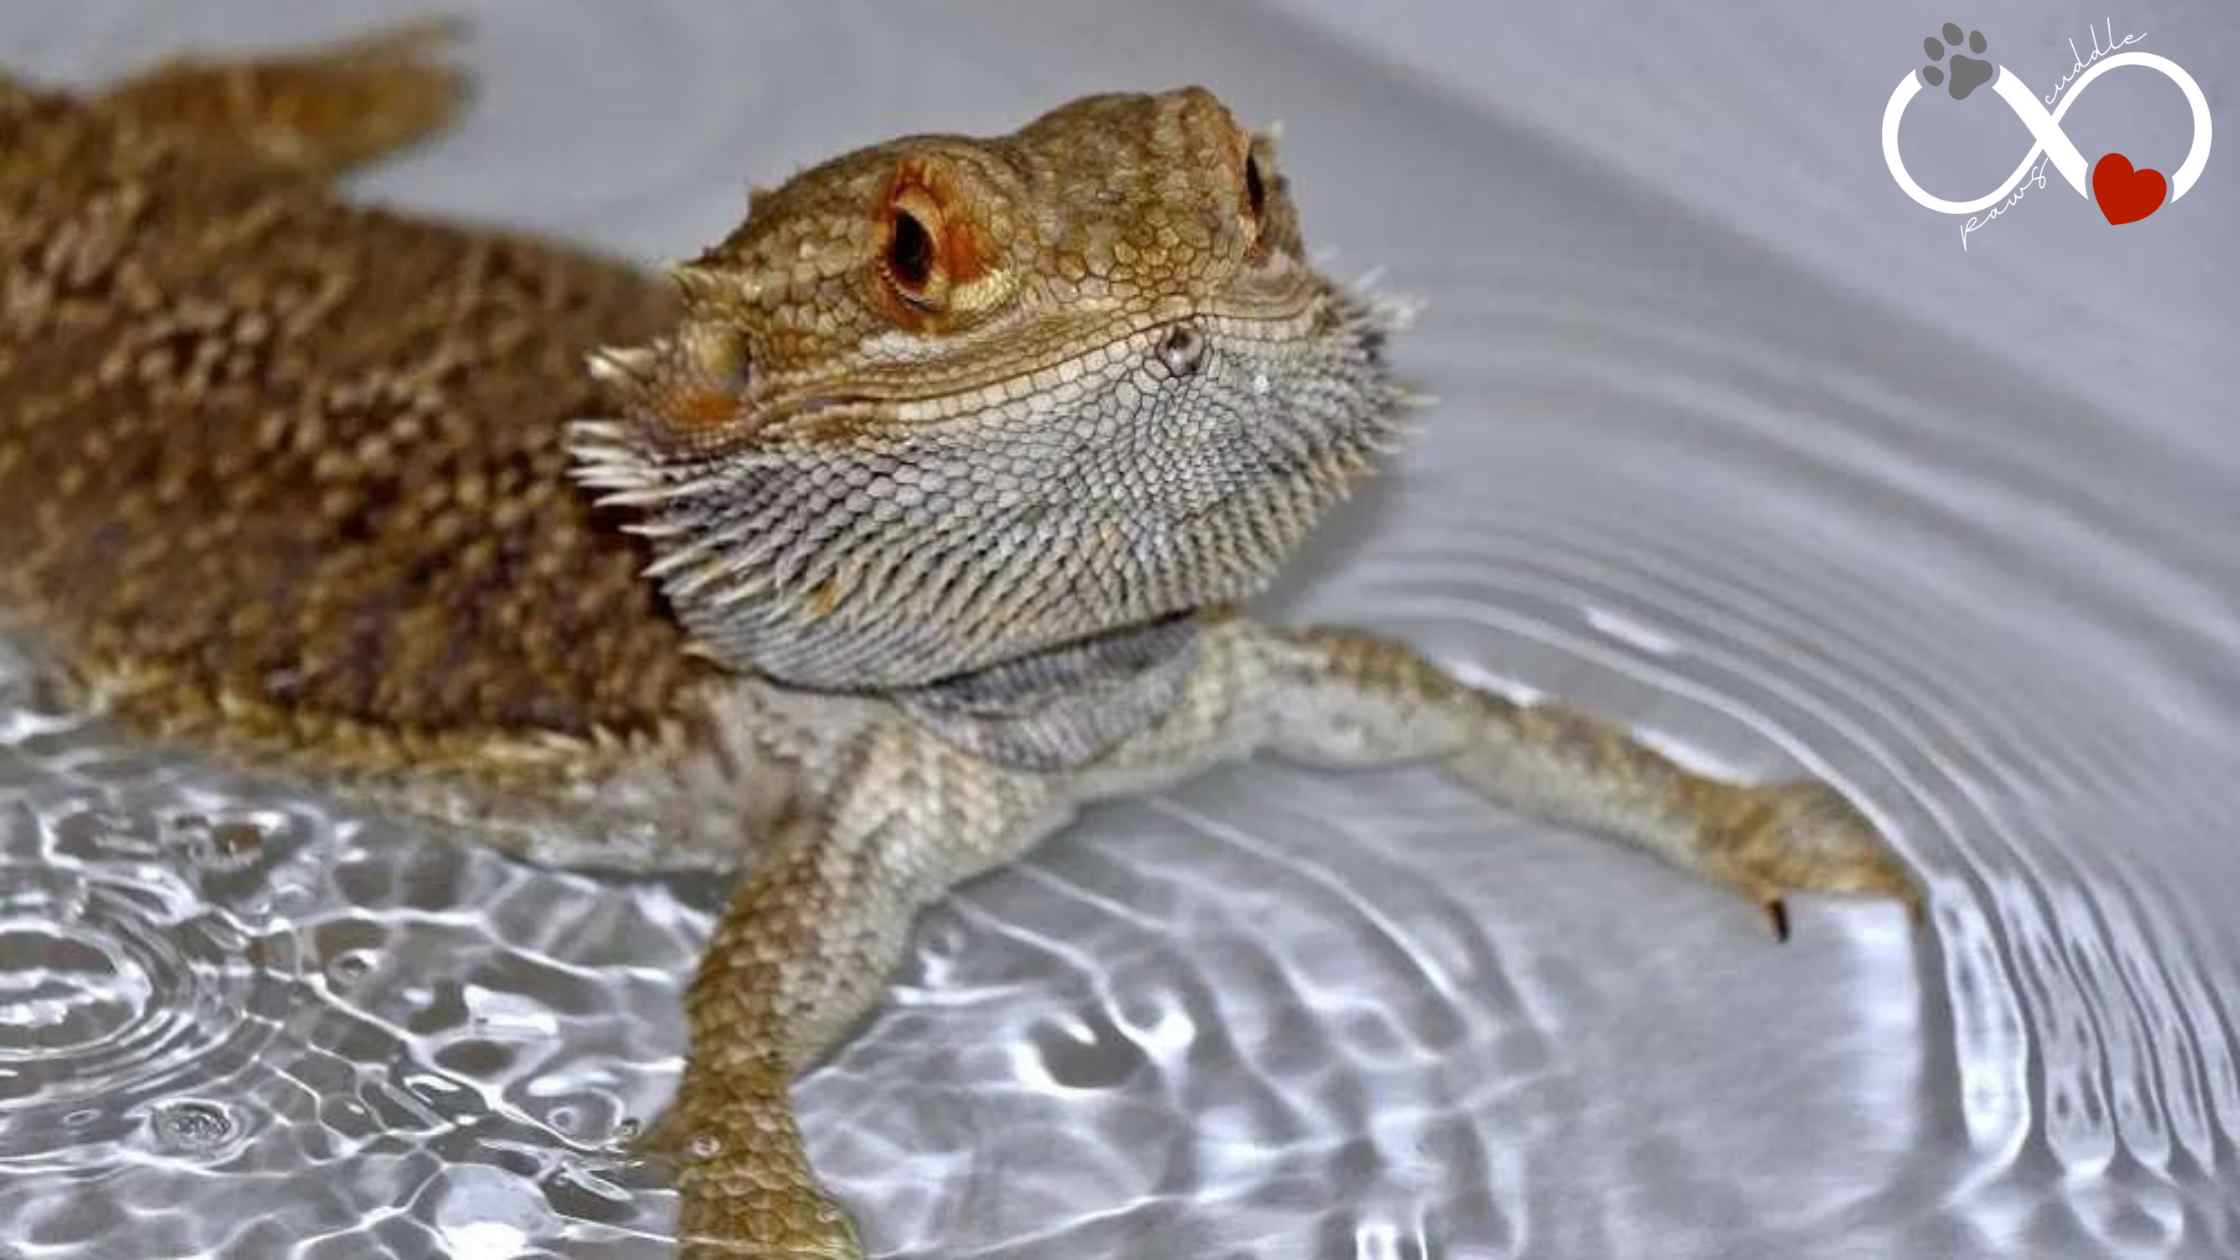 How often do you bathe a bearded dragon